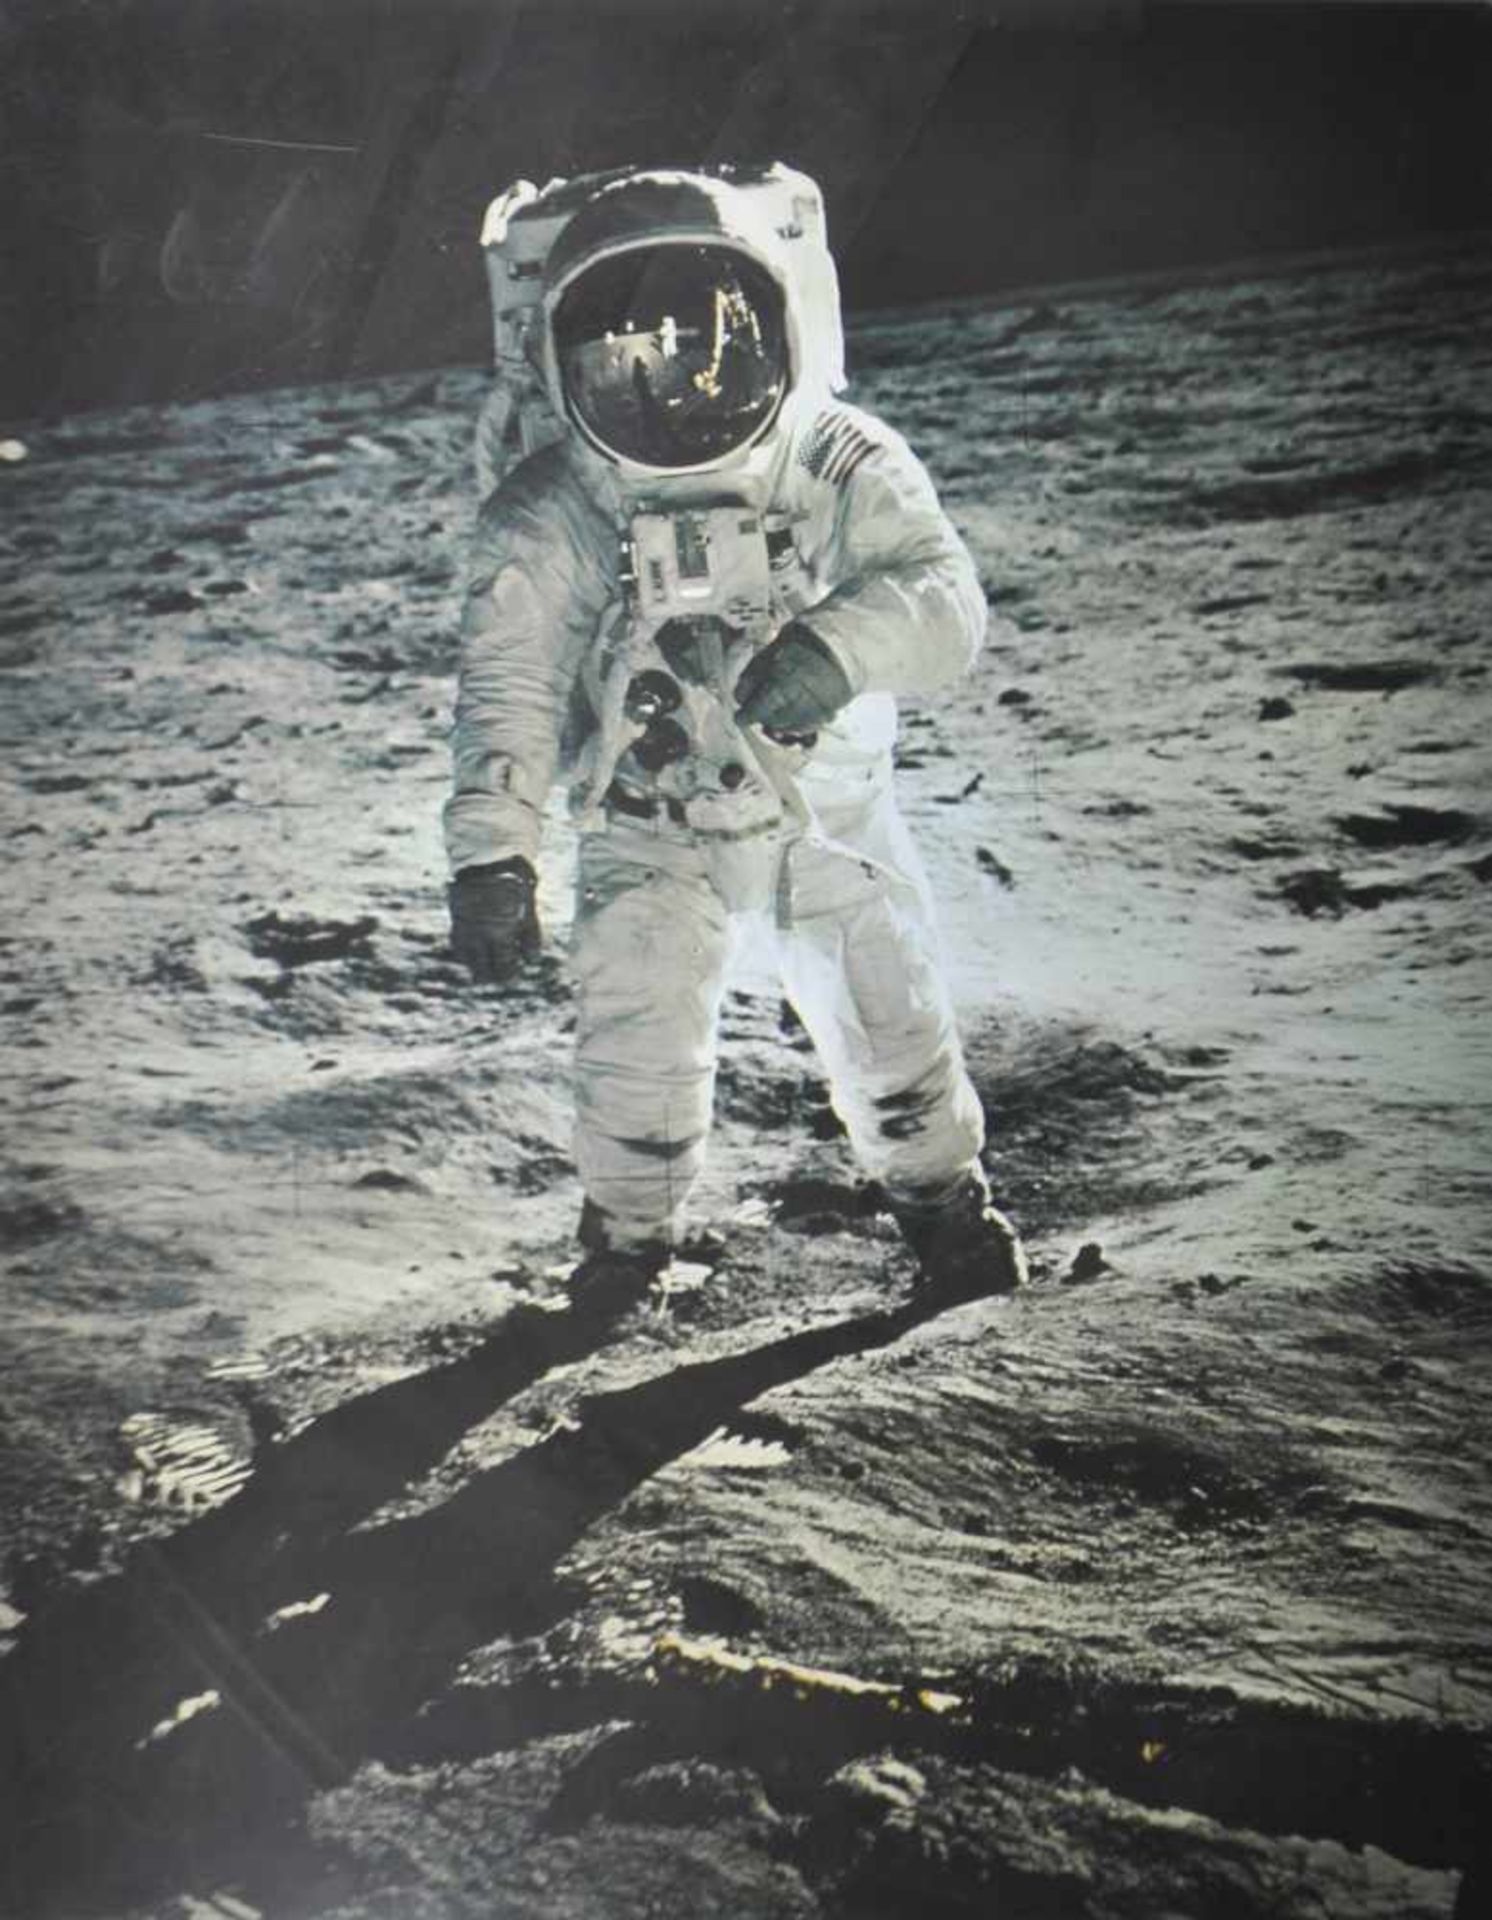 Fotografie/Fotografia Hasselblad Neil Amstrong beim Mondspaziergang, 1969;Farbfotografie., 47,5 x 38